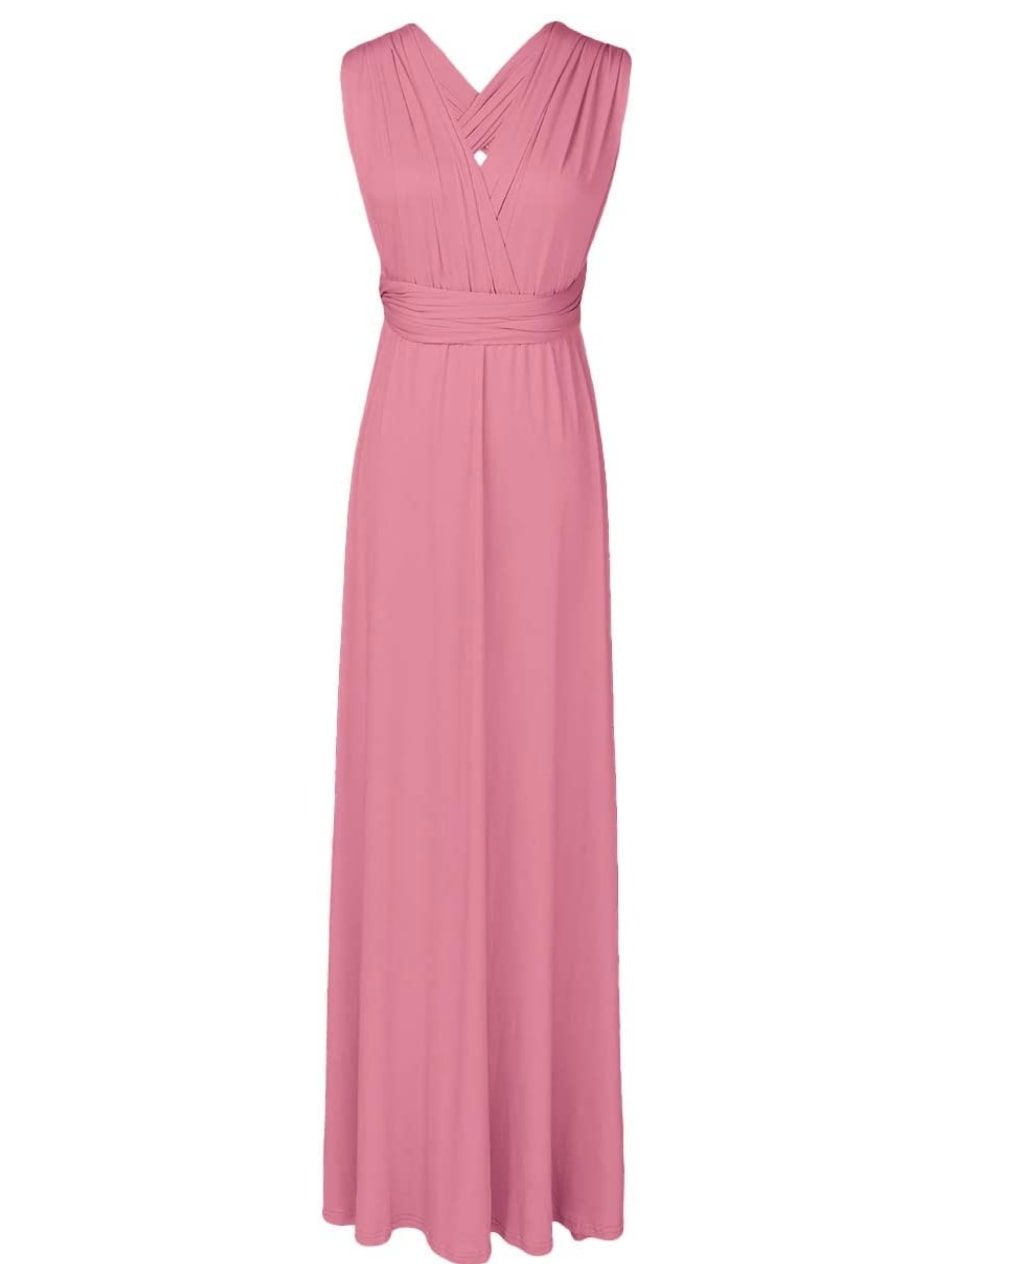 Style B073CGBPLG IWEMEK Size 12 Bridesmaid Pink Floor Length Maxi on Queenly